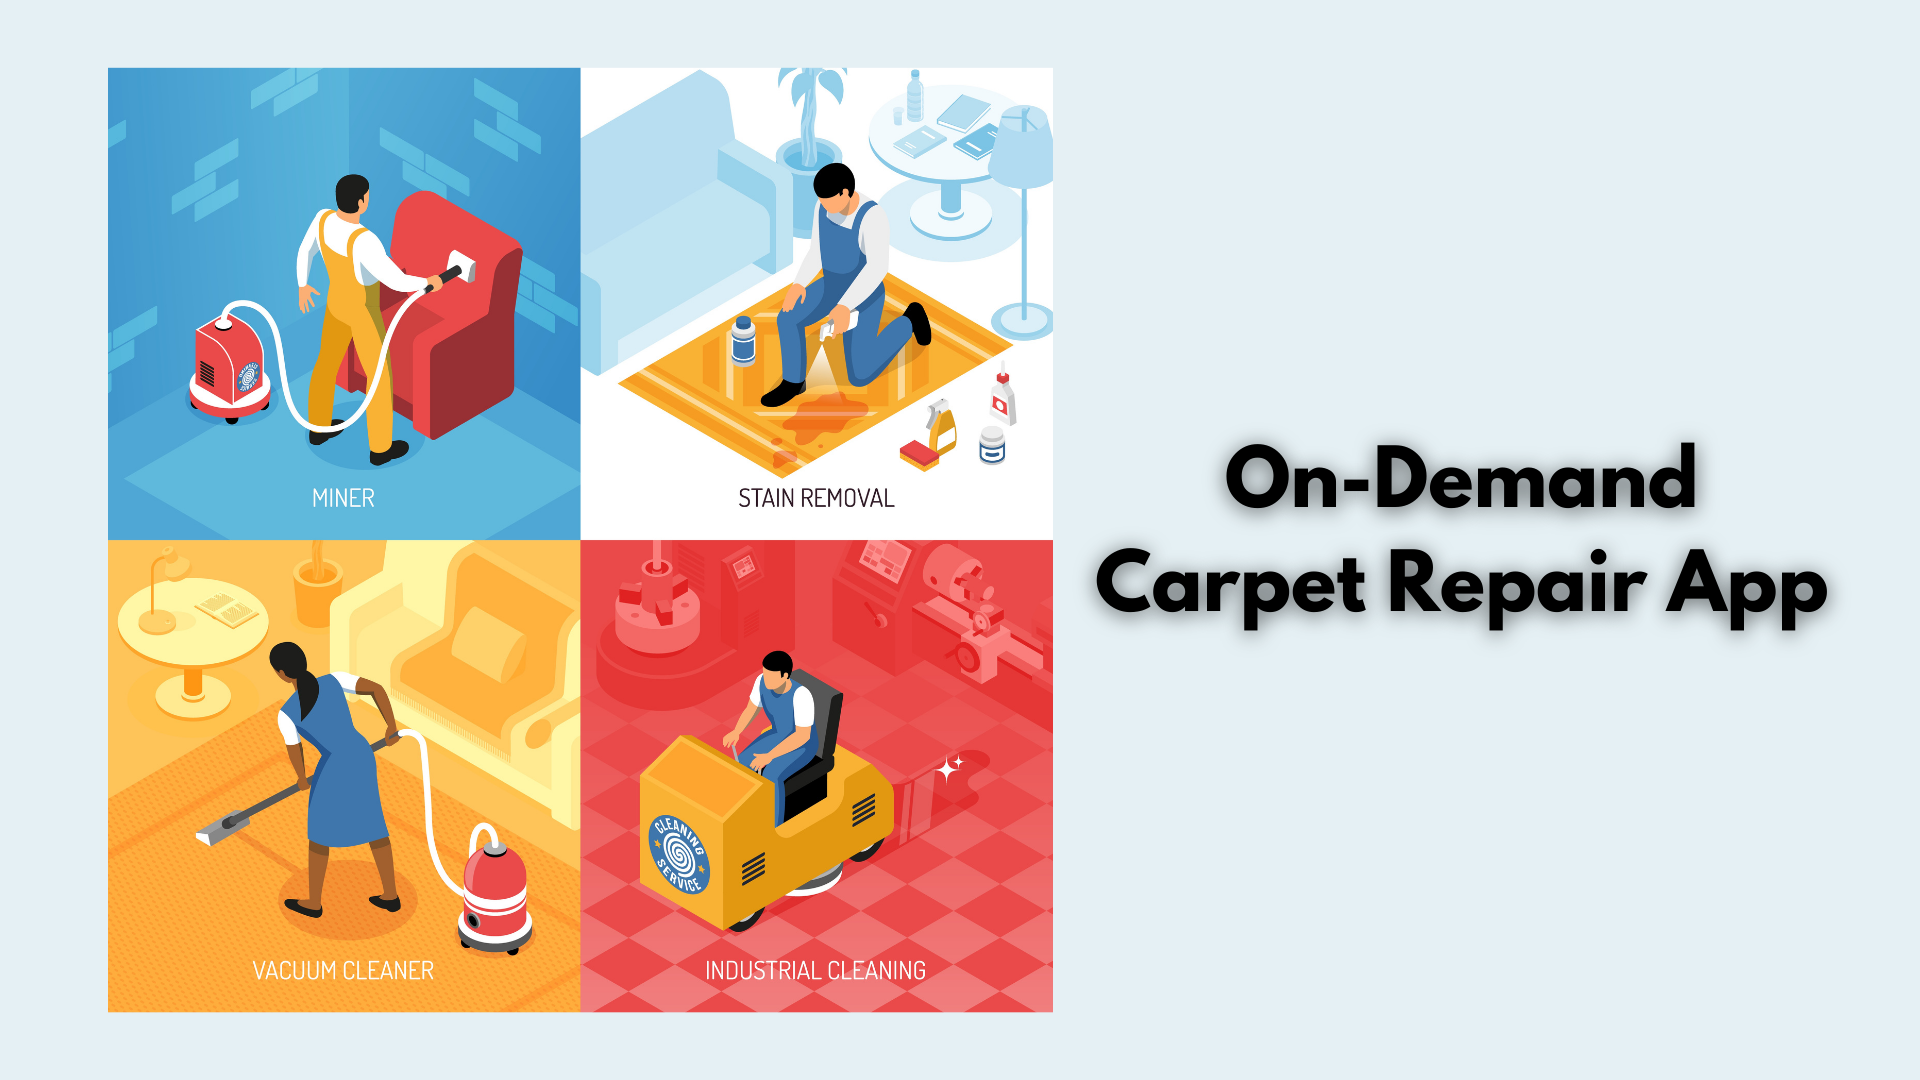 Article about Uber carpet repair app development